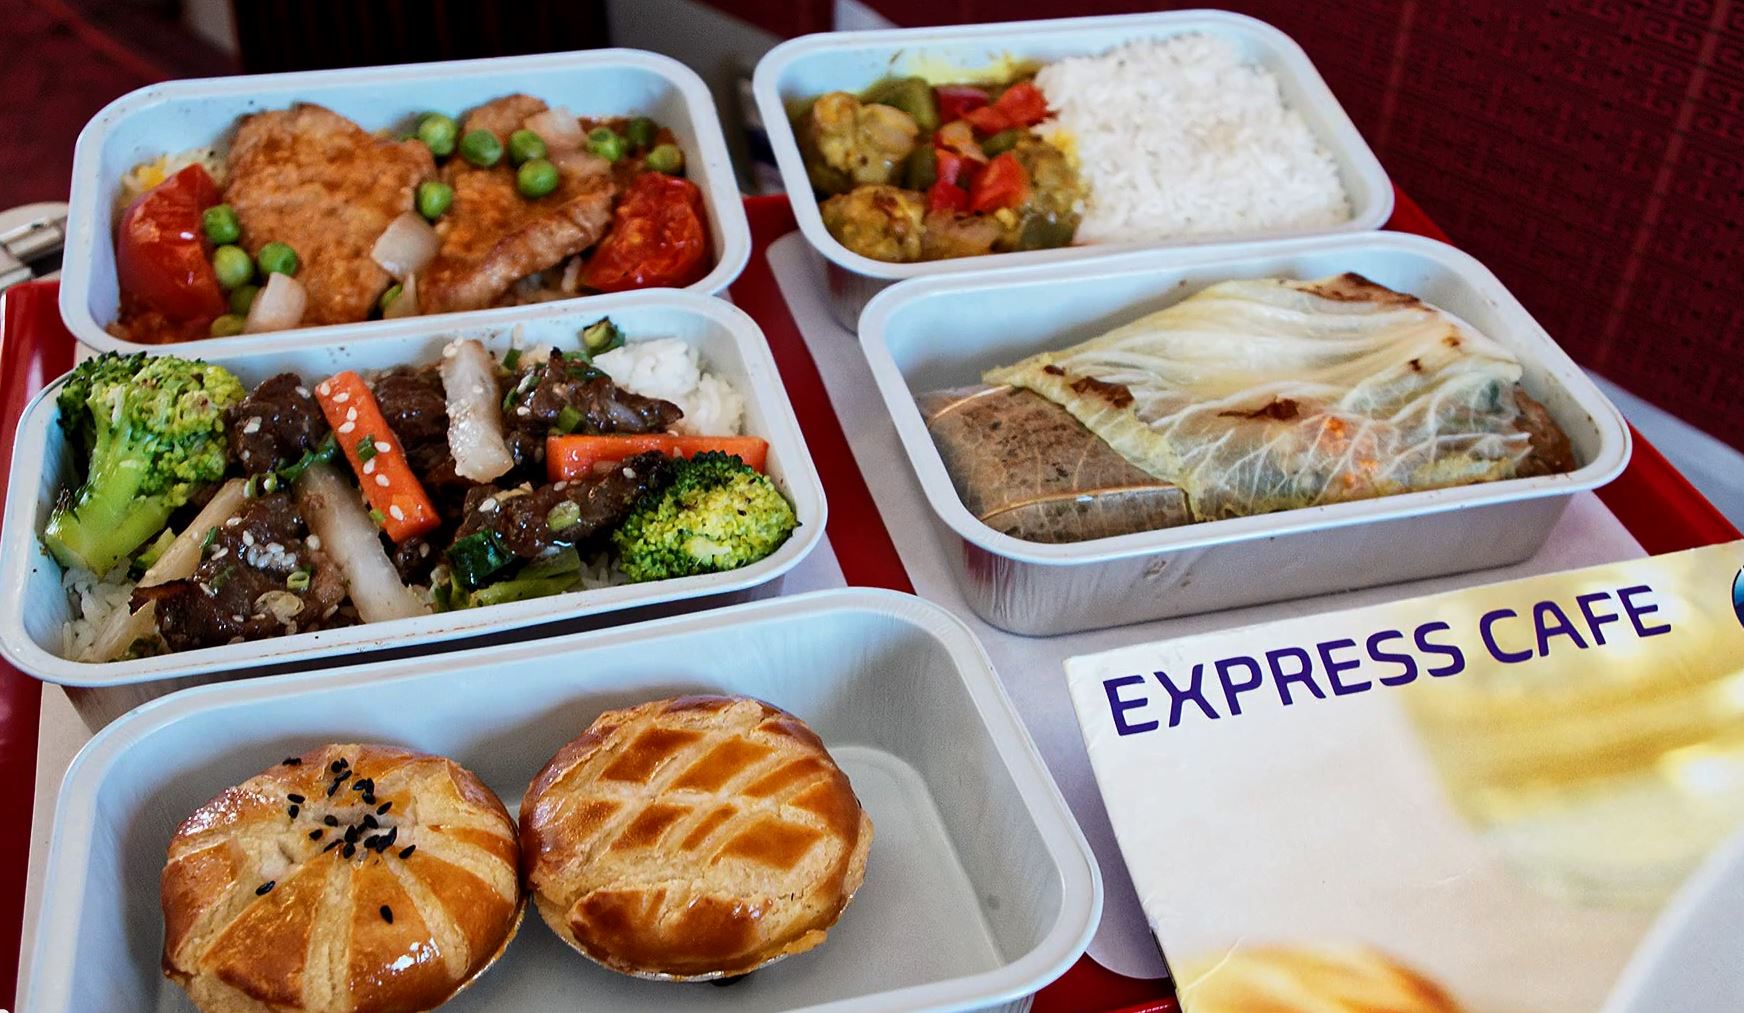 Hong Kong Express – Tasting all the meals inflight